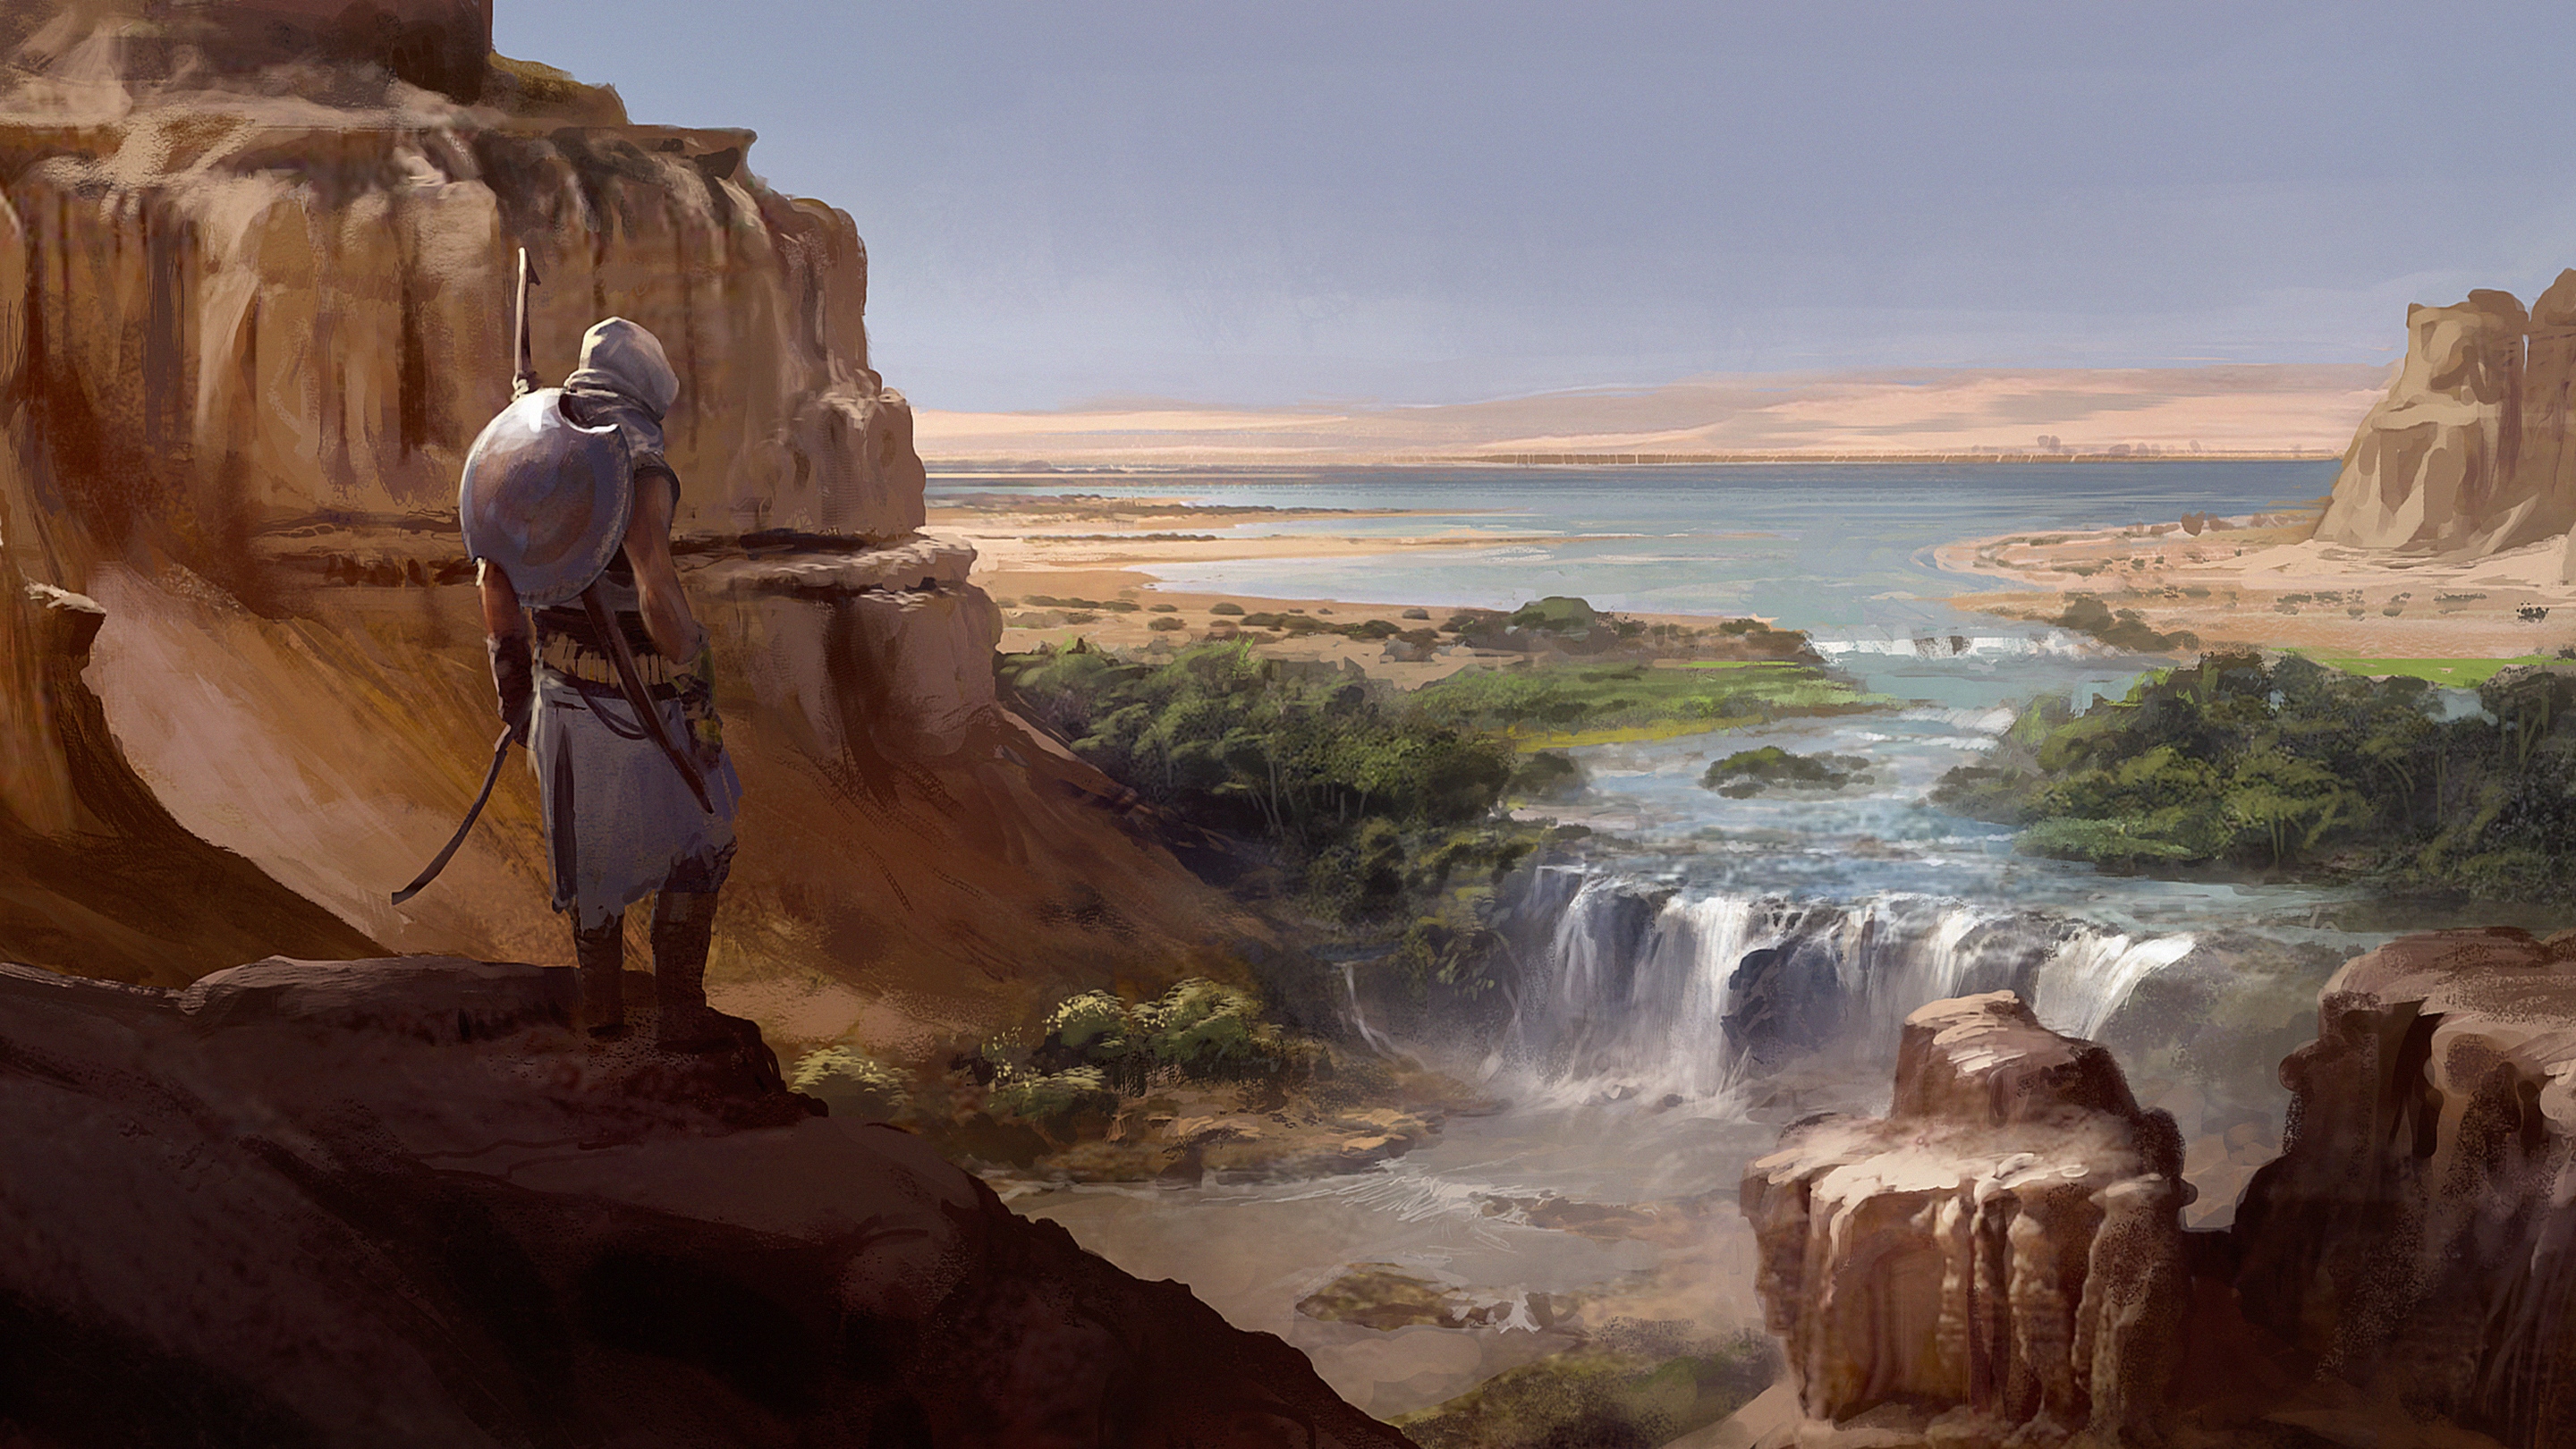 General 2880x1620 digital art artwork video games Assassin's Creed: Origins Assassin's Creed landscape river Bayek Egypt waterfall desert warrior Ubisoft